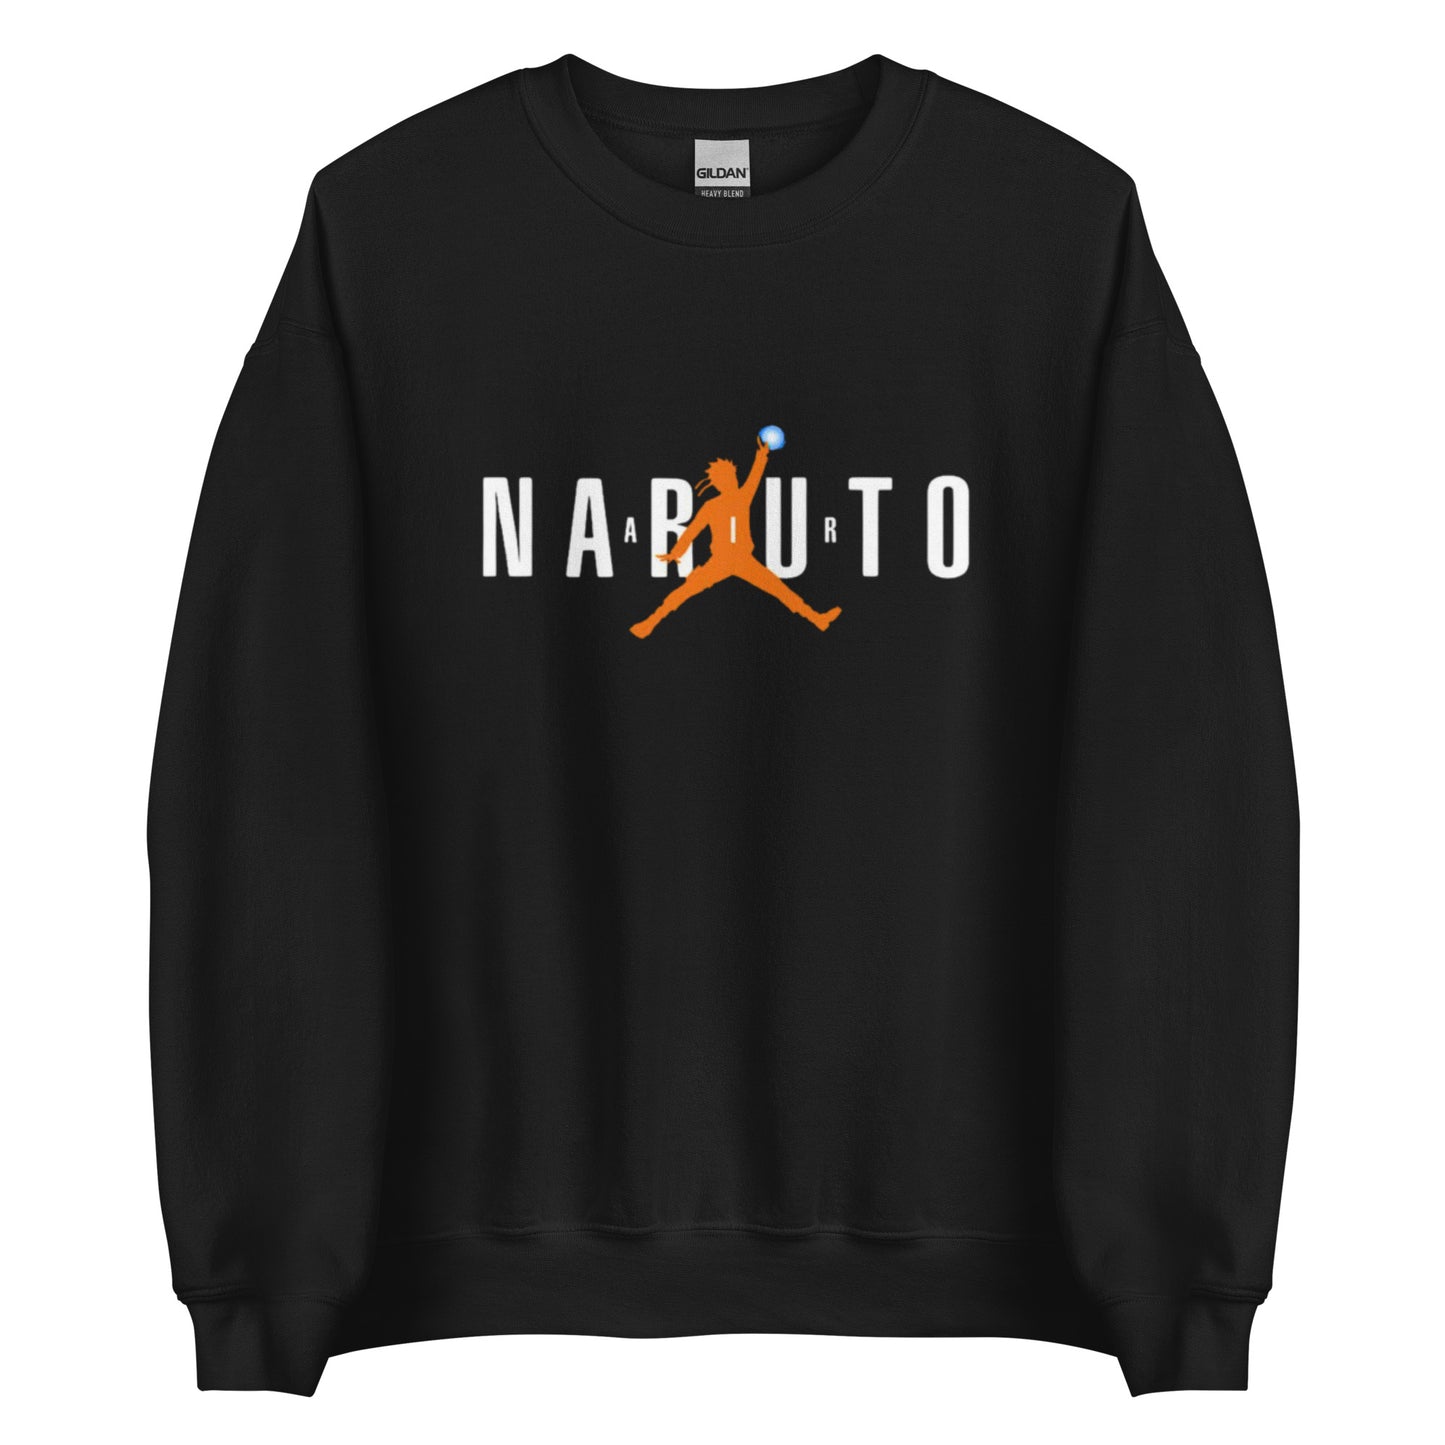 Unisex Sweatshirt Air Naruto